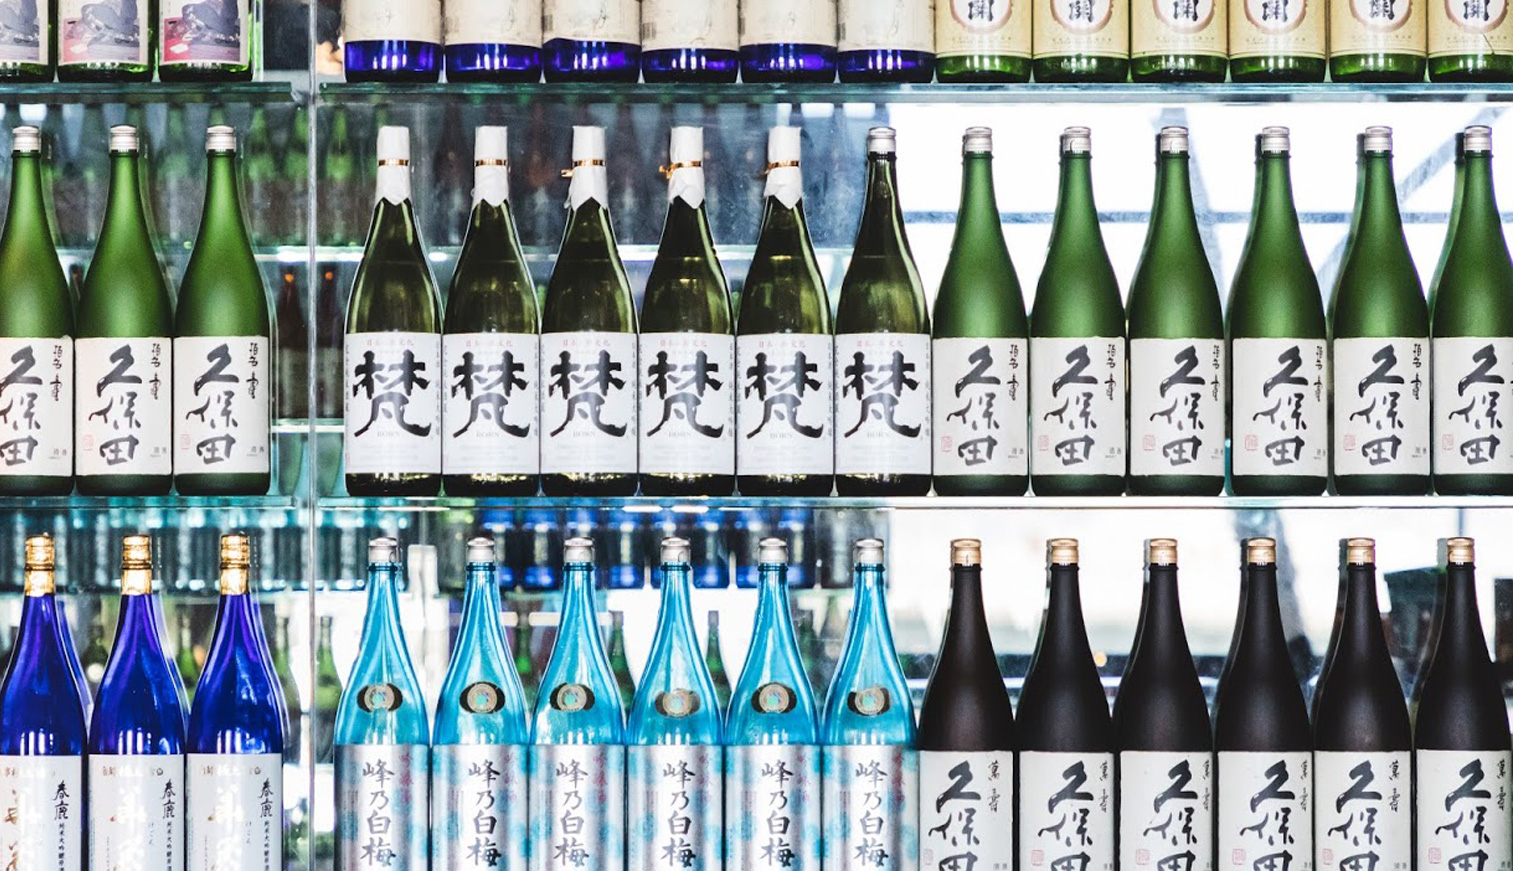 Our beautiful selection of Japanese sake